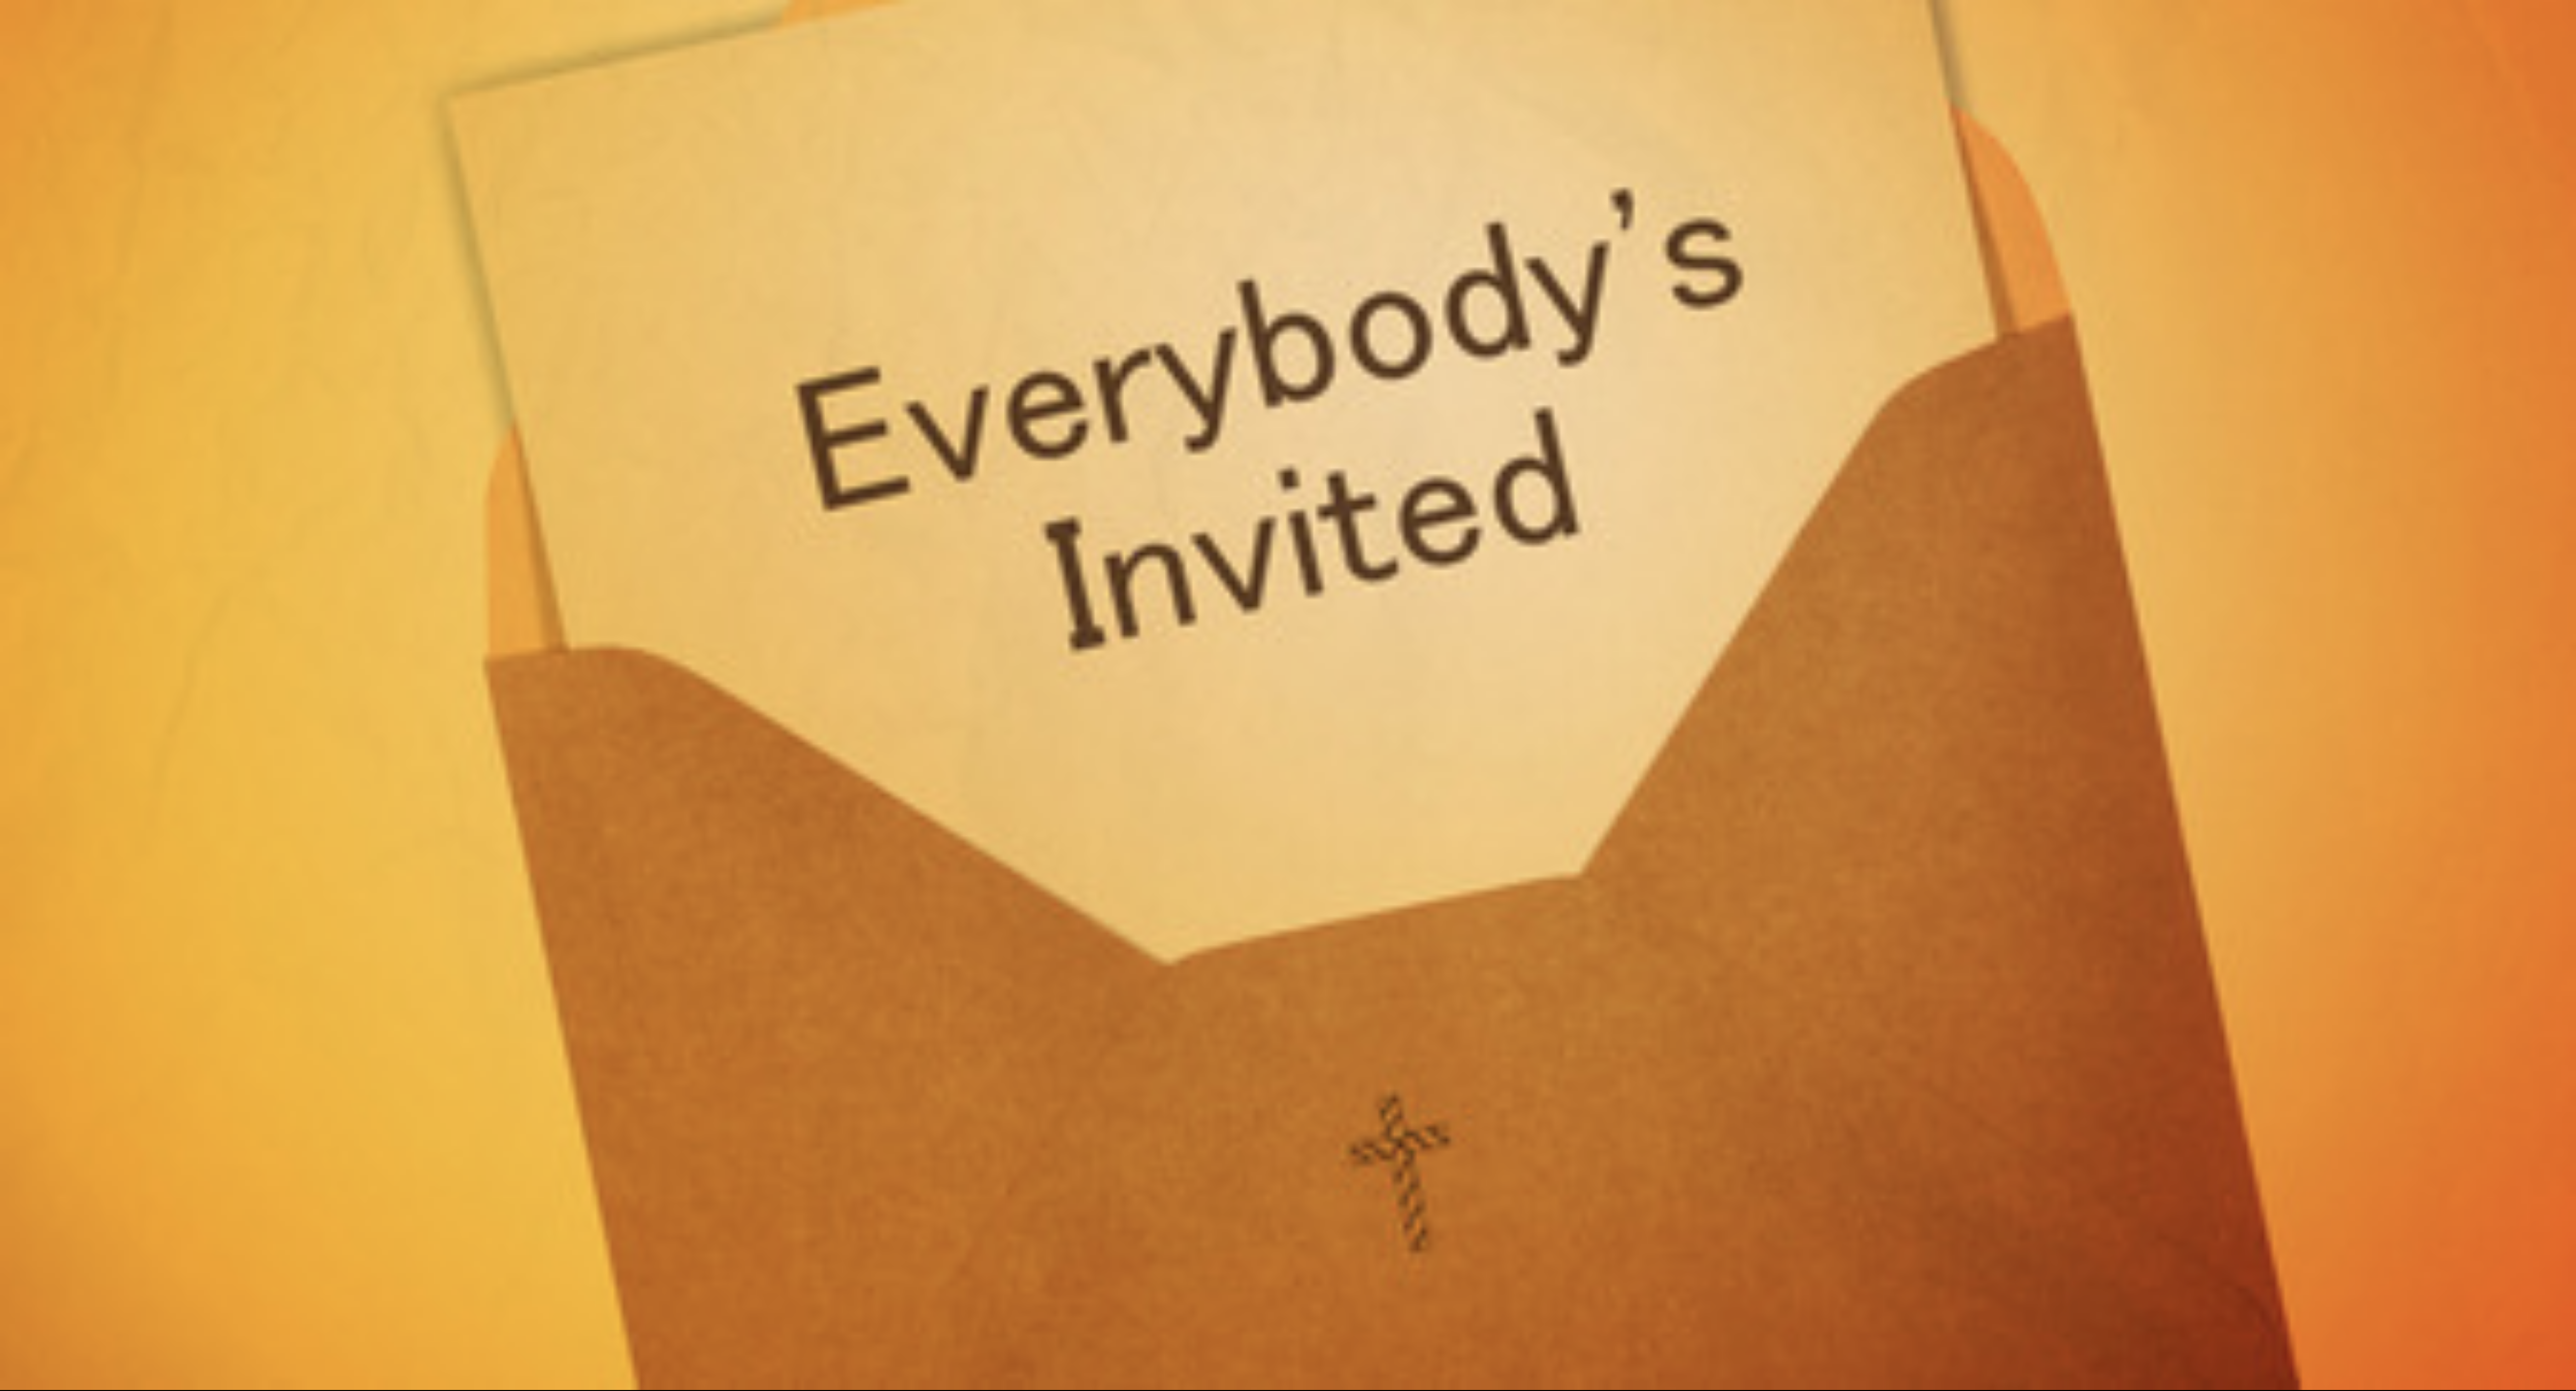 Everybody's Invited